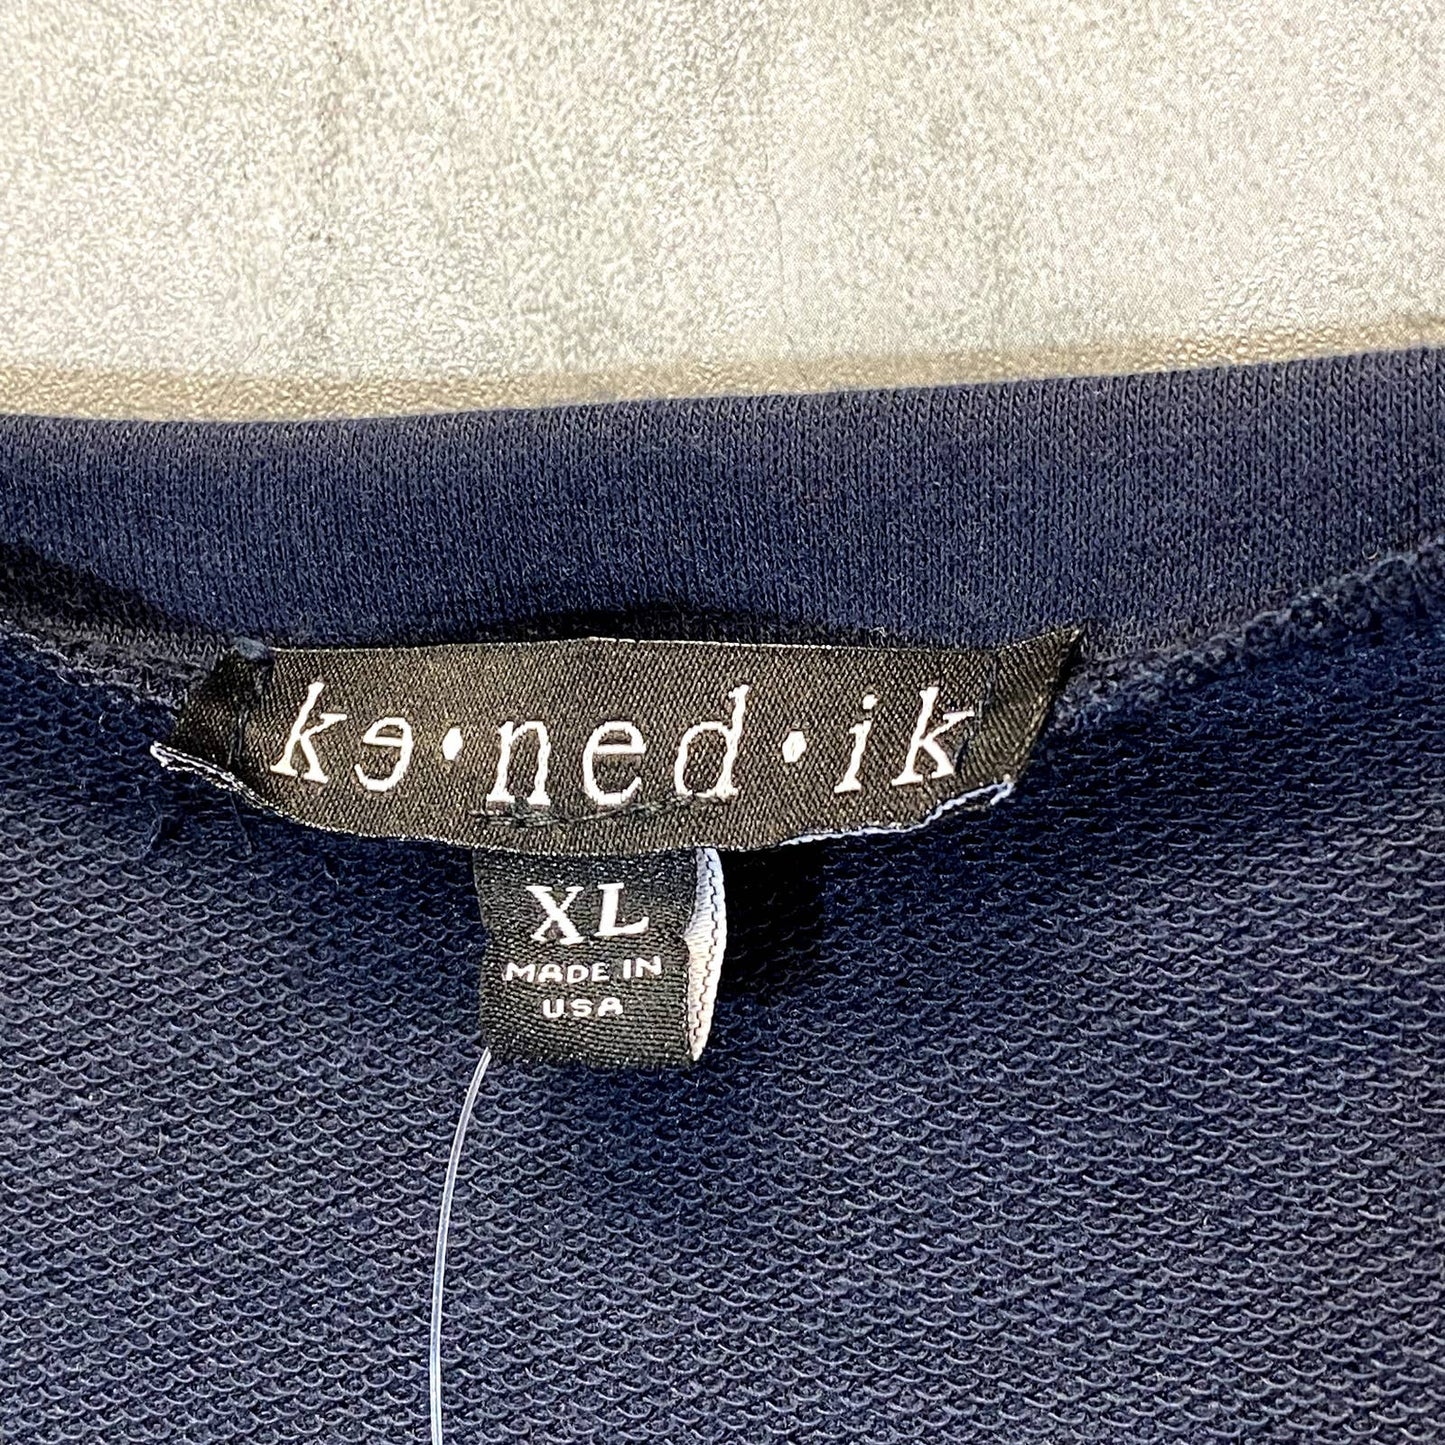 KE-NED-IK Women's Navy Round Neck Long Sleeve A-Line Mini Dress SZ XL